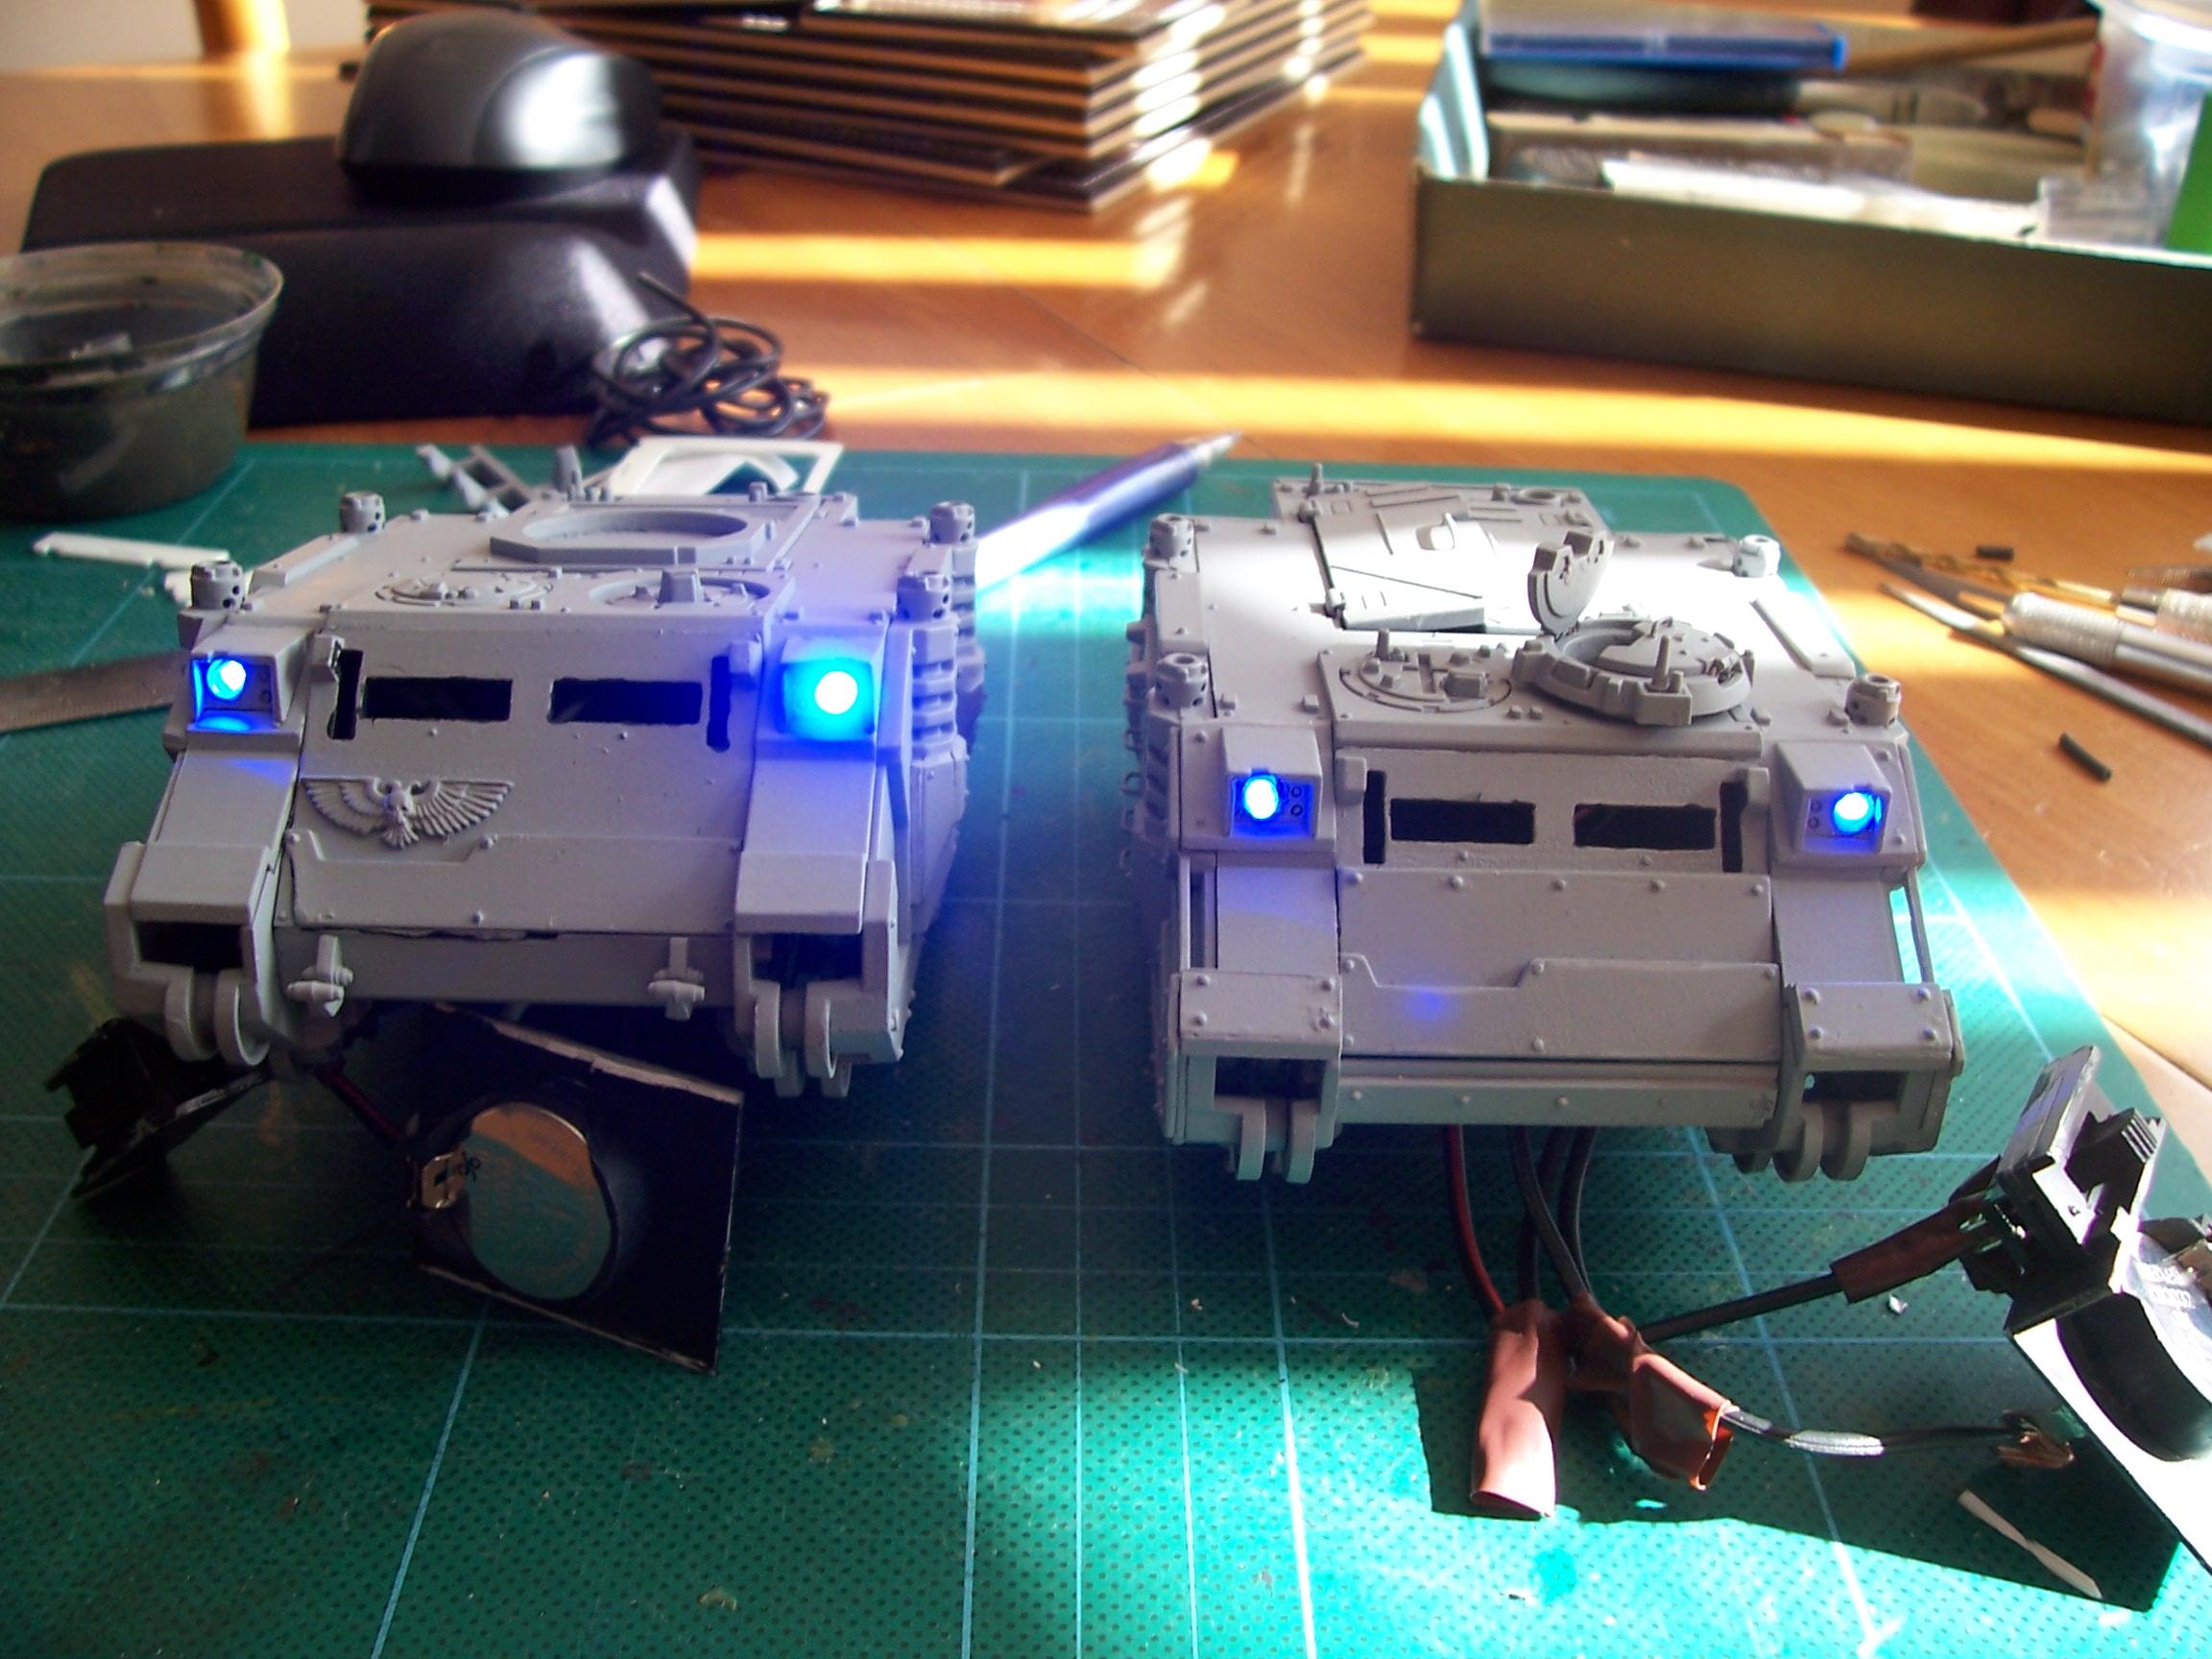 Armor, LED, Magnetised, Predator, Rhino, Work In Progress